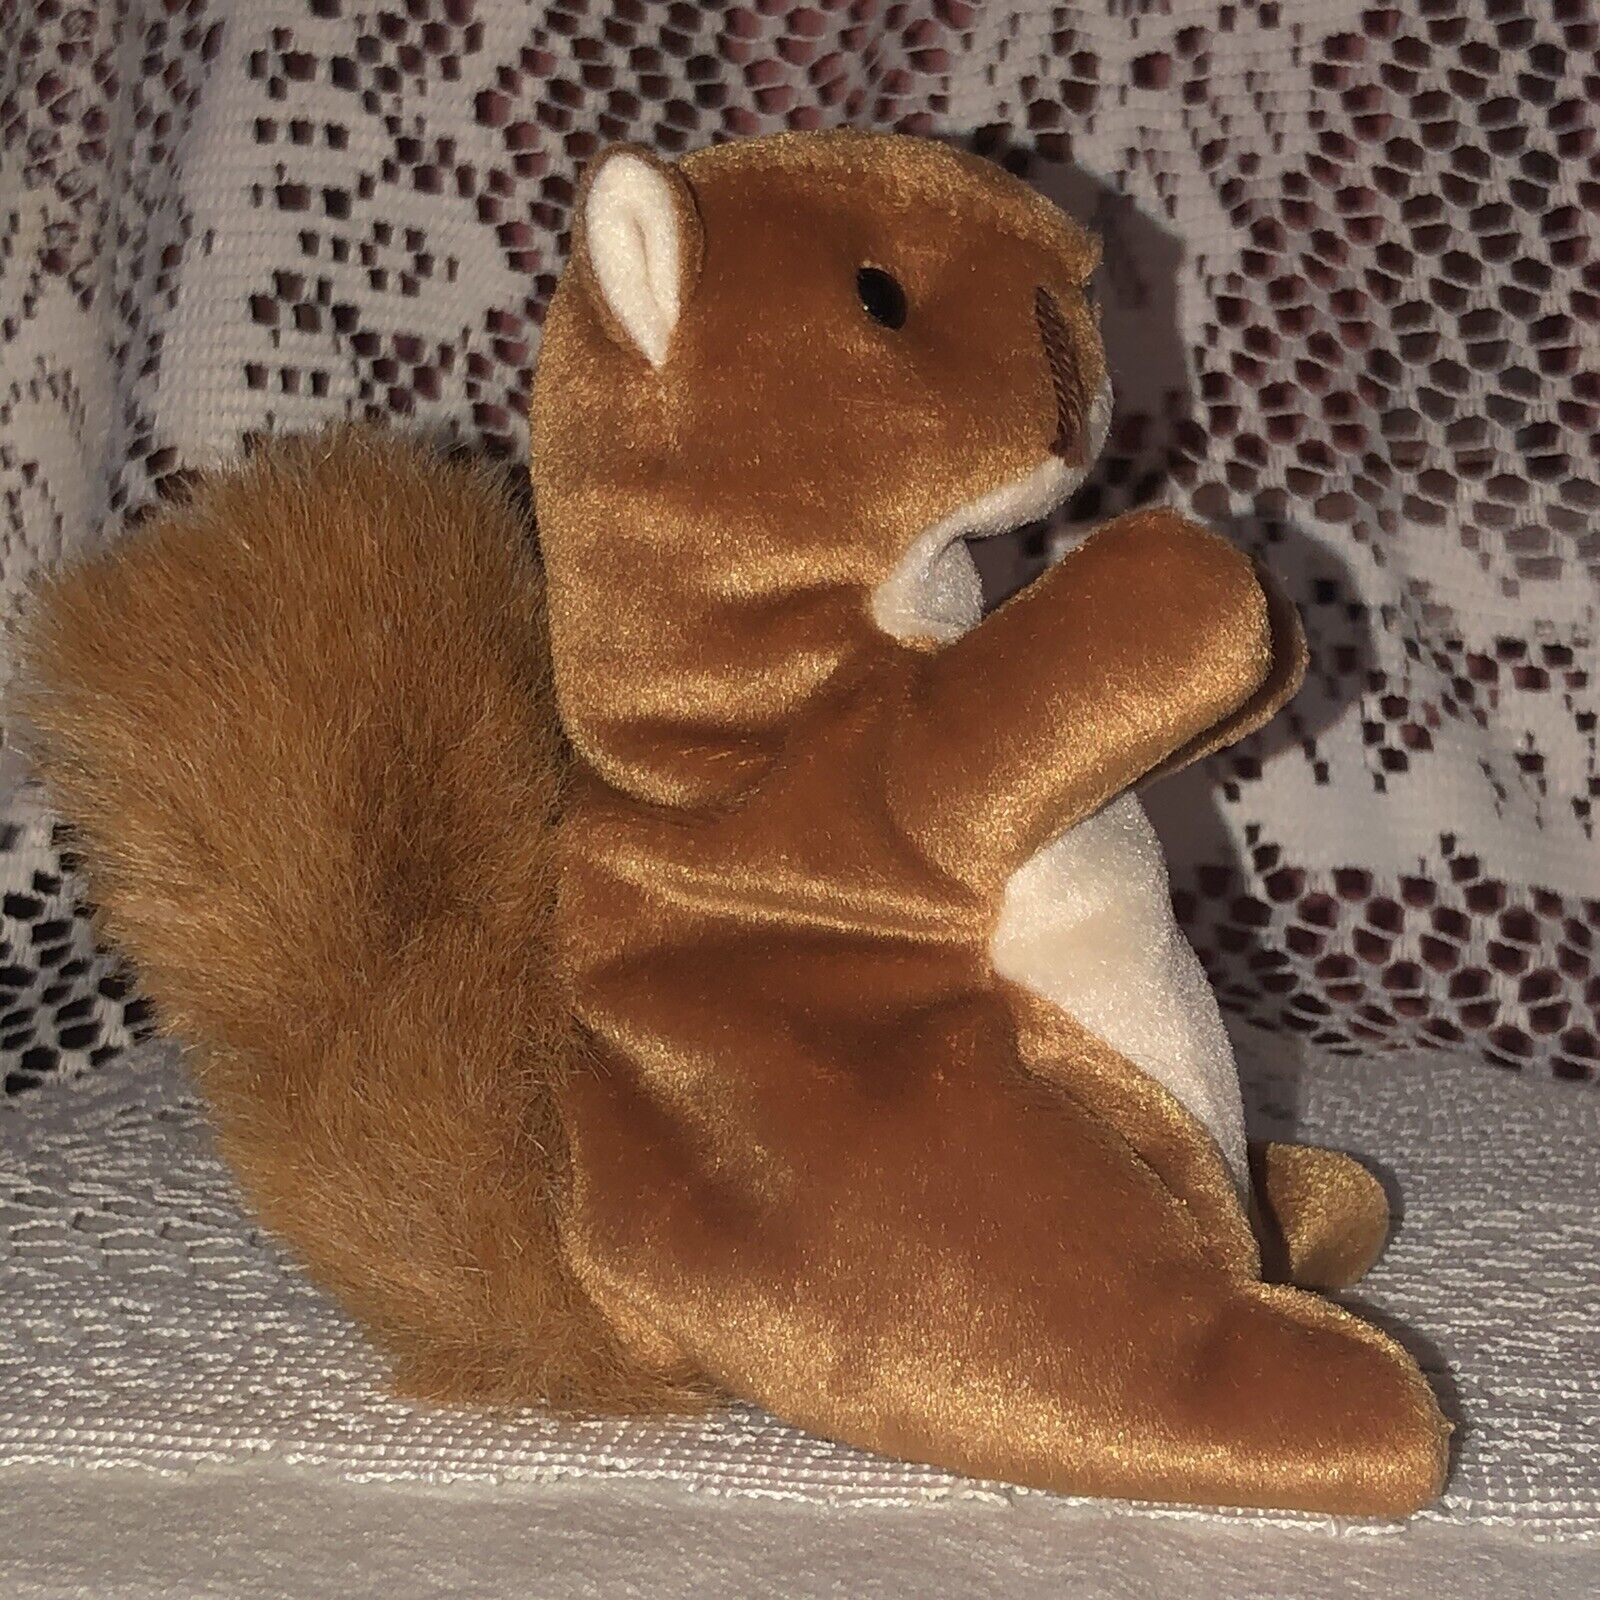 Nuts The Squirrel Ty Original Beanie Baby MWMT 1996 5th Gen for sale online